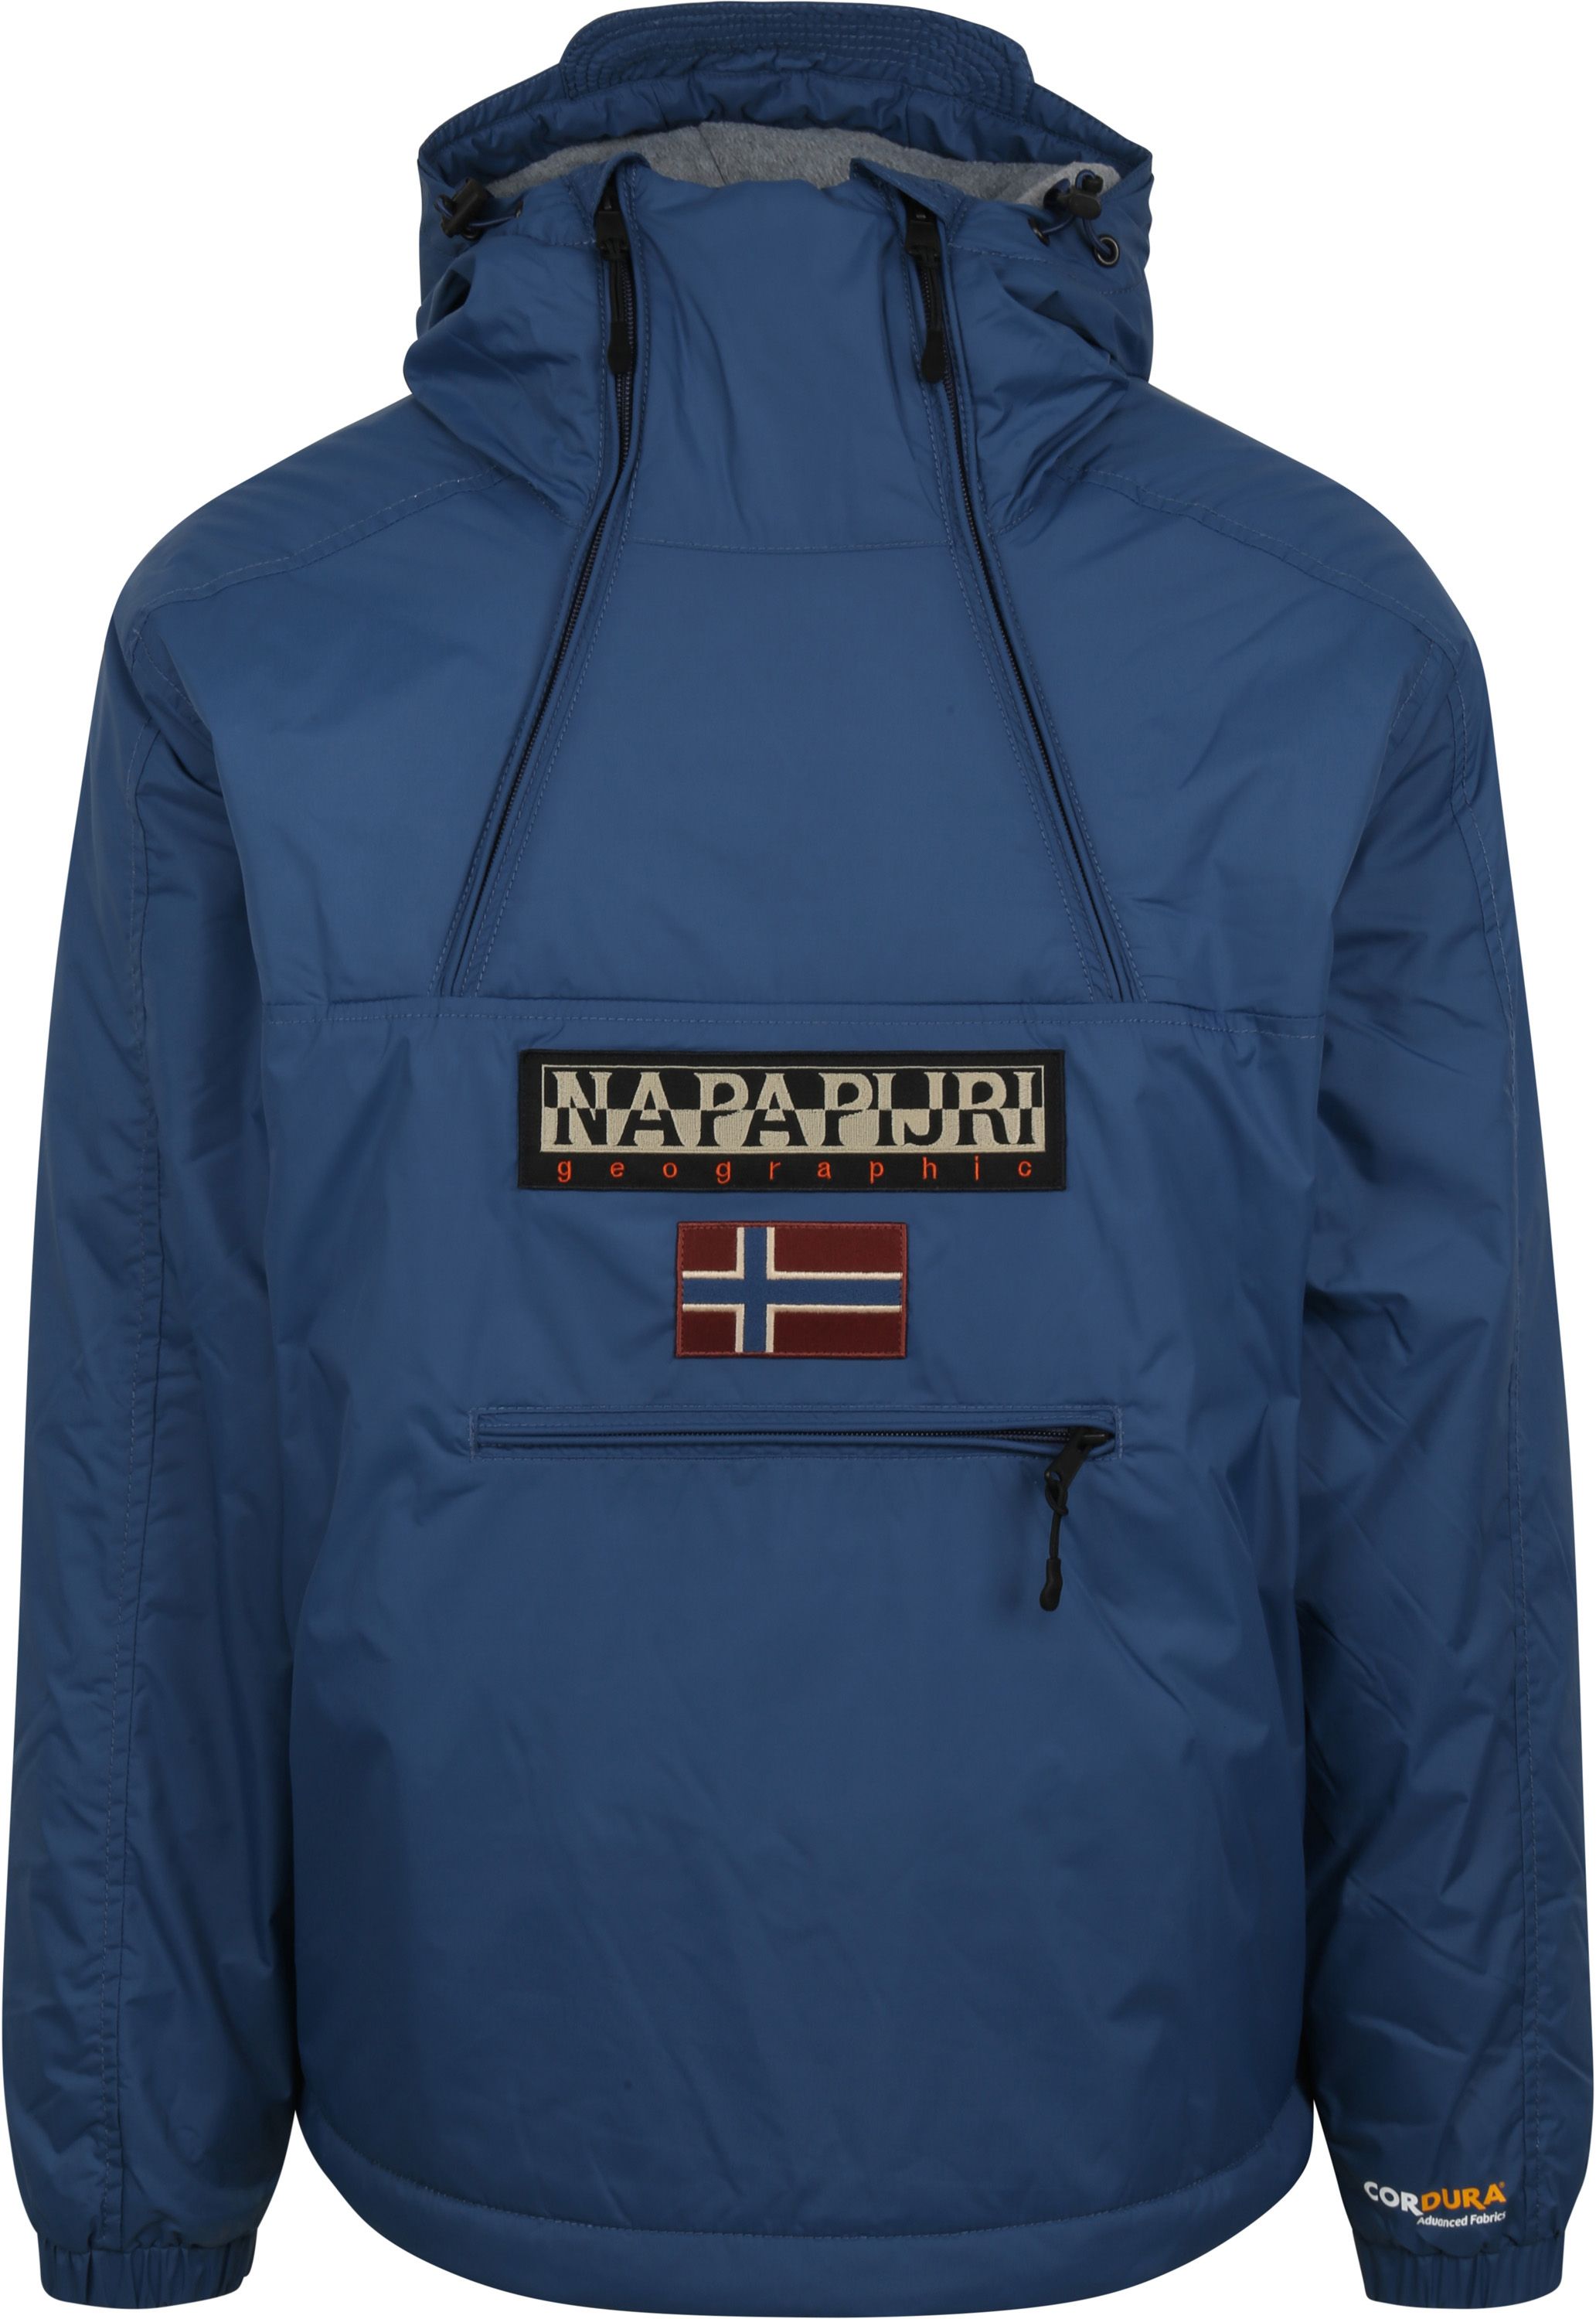 Napapijri Northfarer Jacket Mid Blue size L